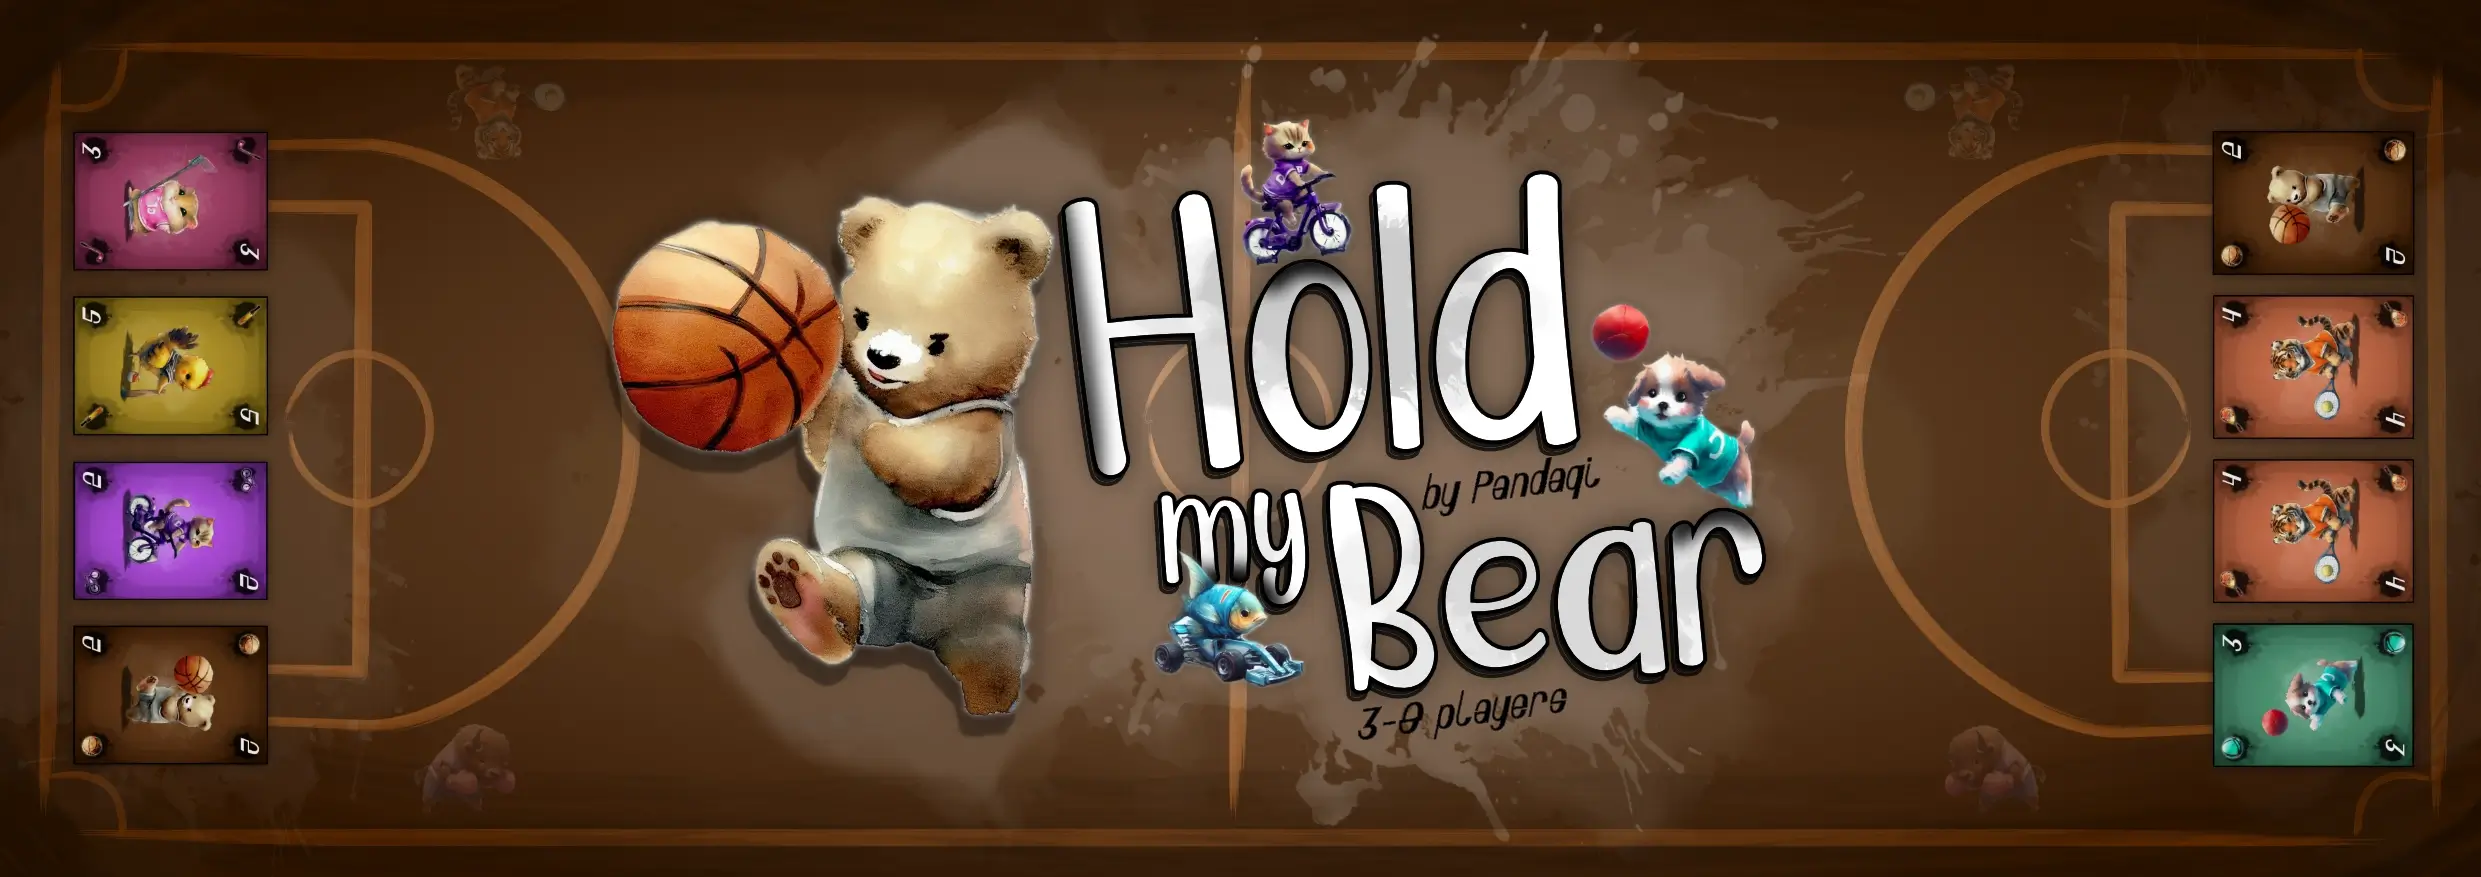 Hold my bear header